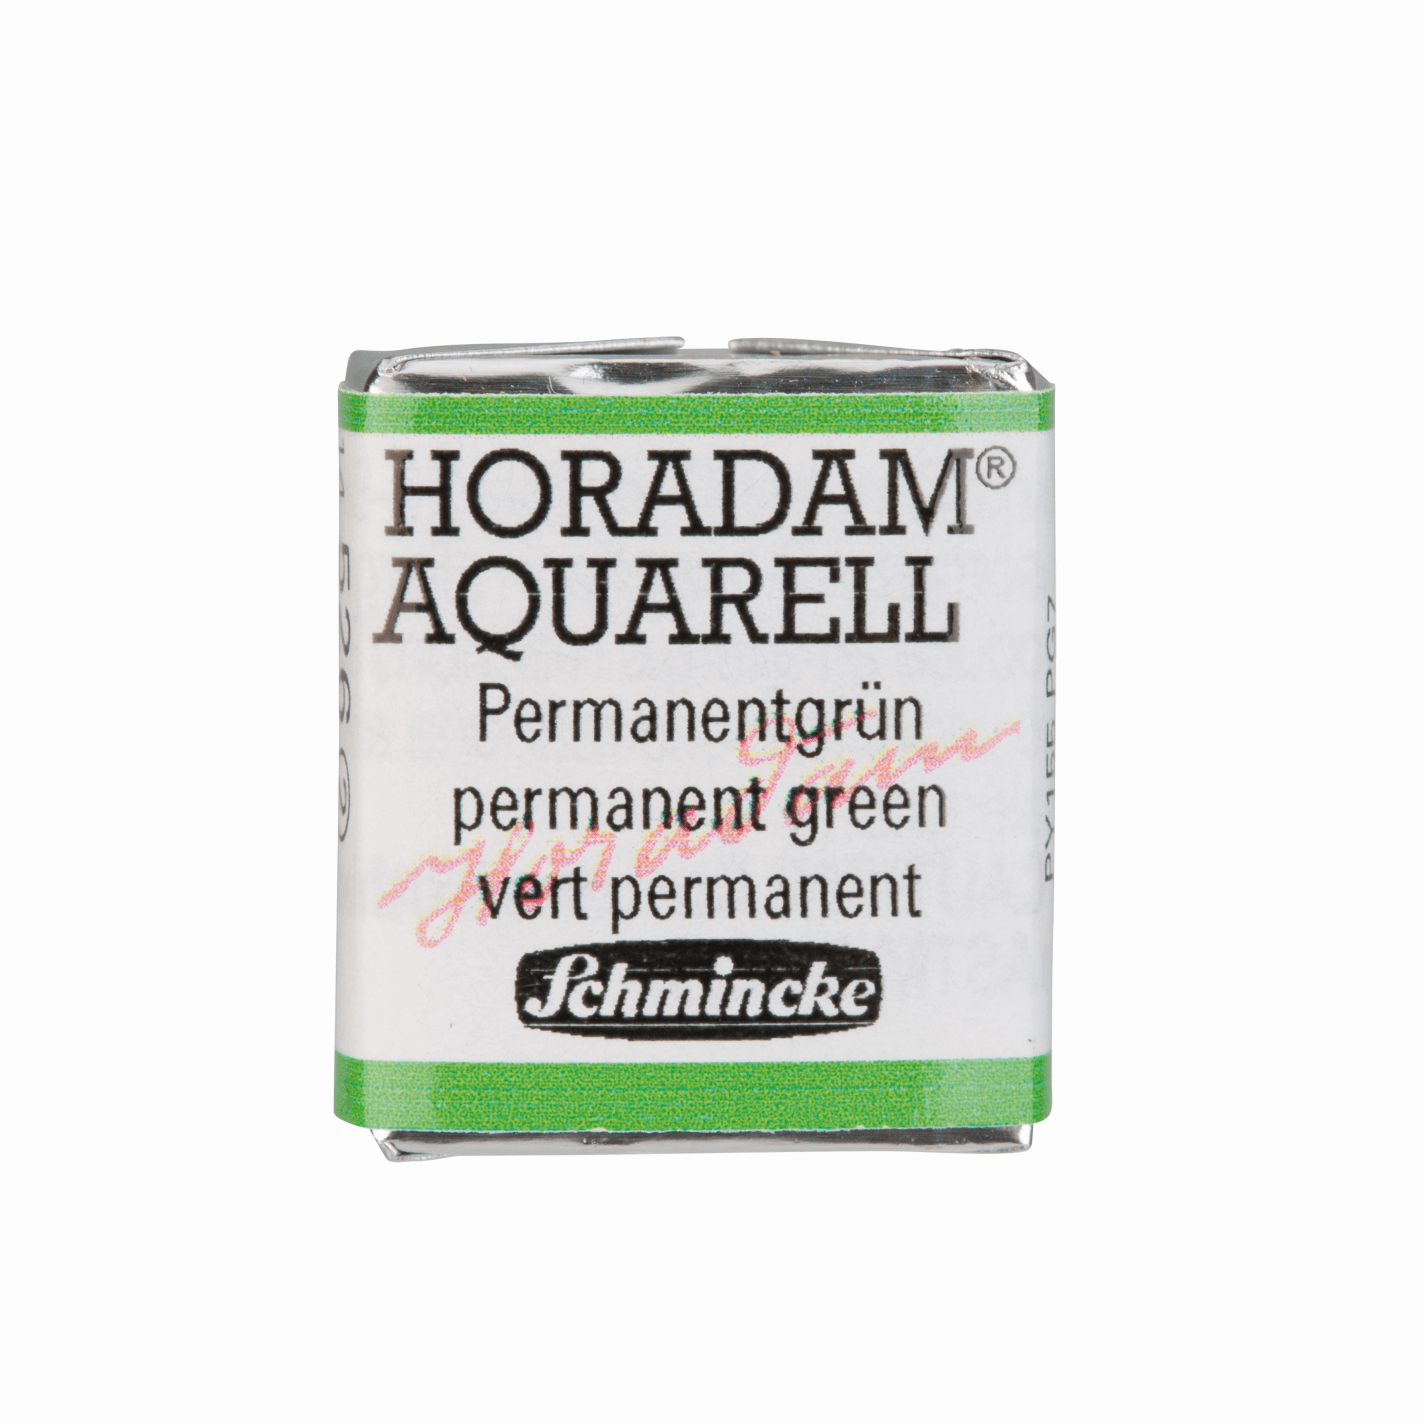 Schmincke Horadam Aquarell pans 1/2 pan Permanent Green